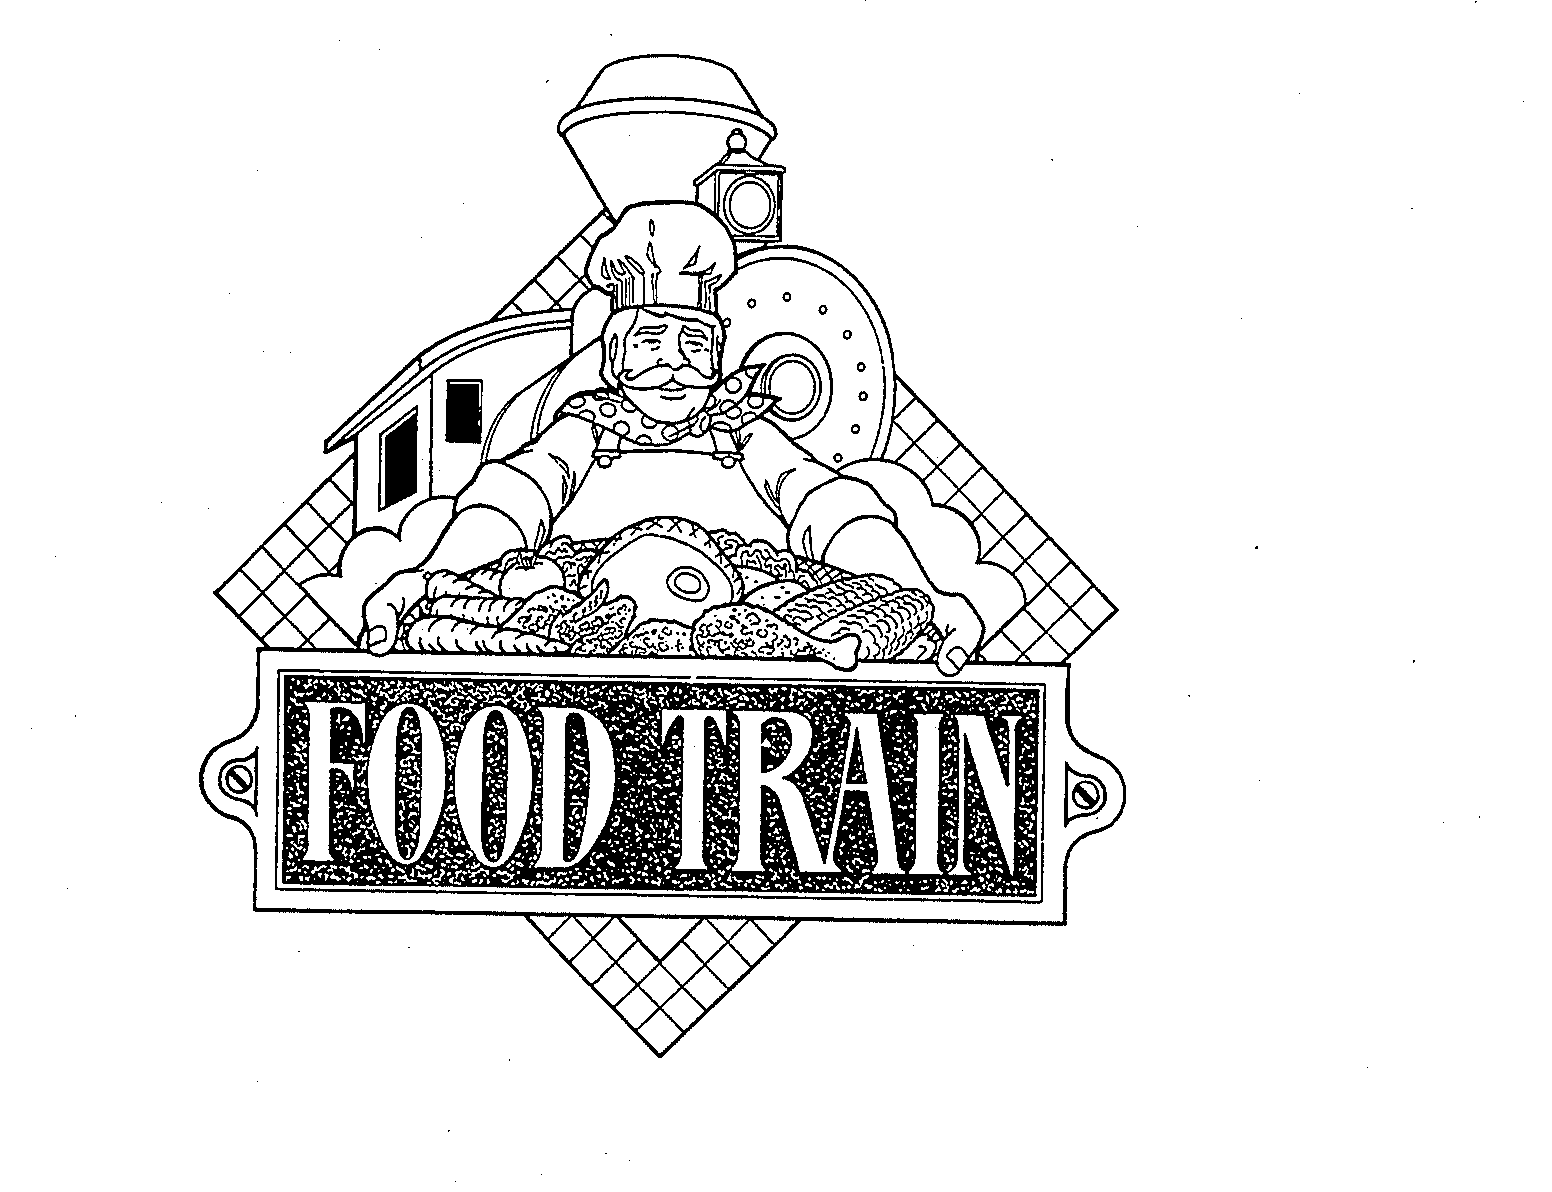  FOOD TRAIN